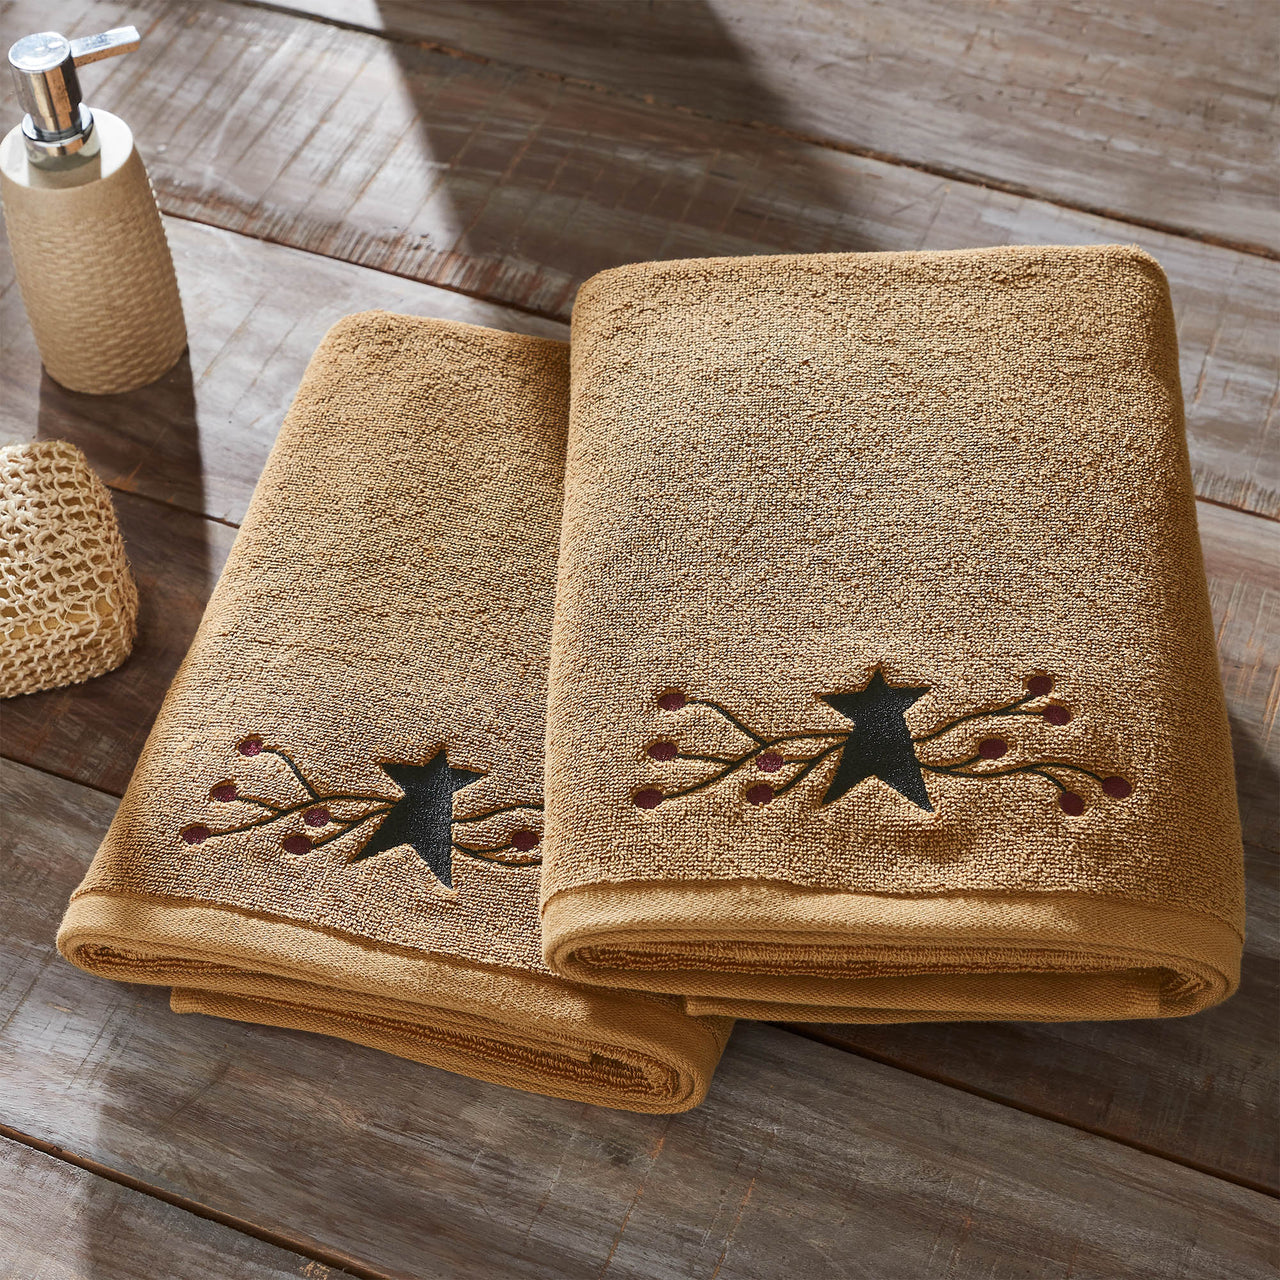 Pip Vinestar Bath Towel Set of 2 27x54 VHC Brands